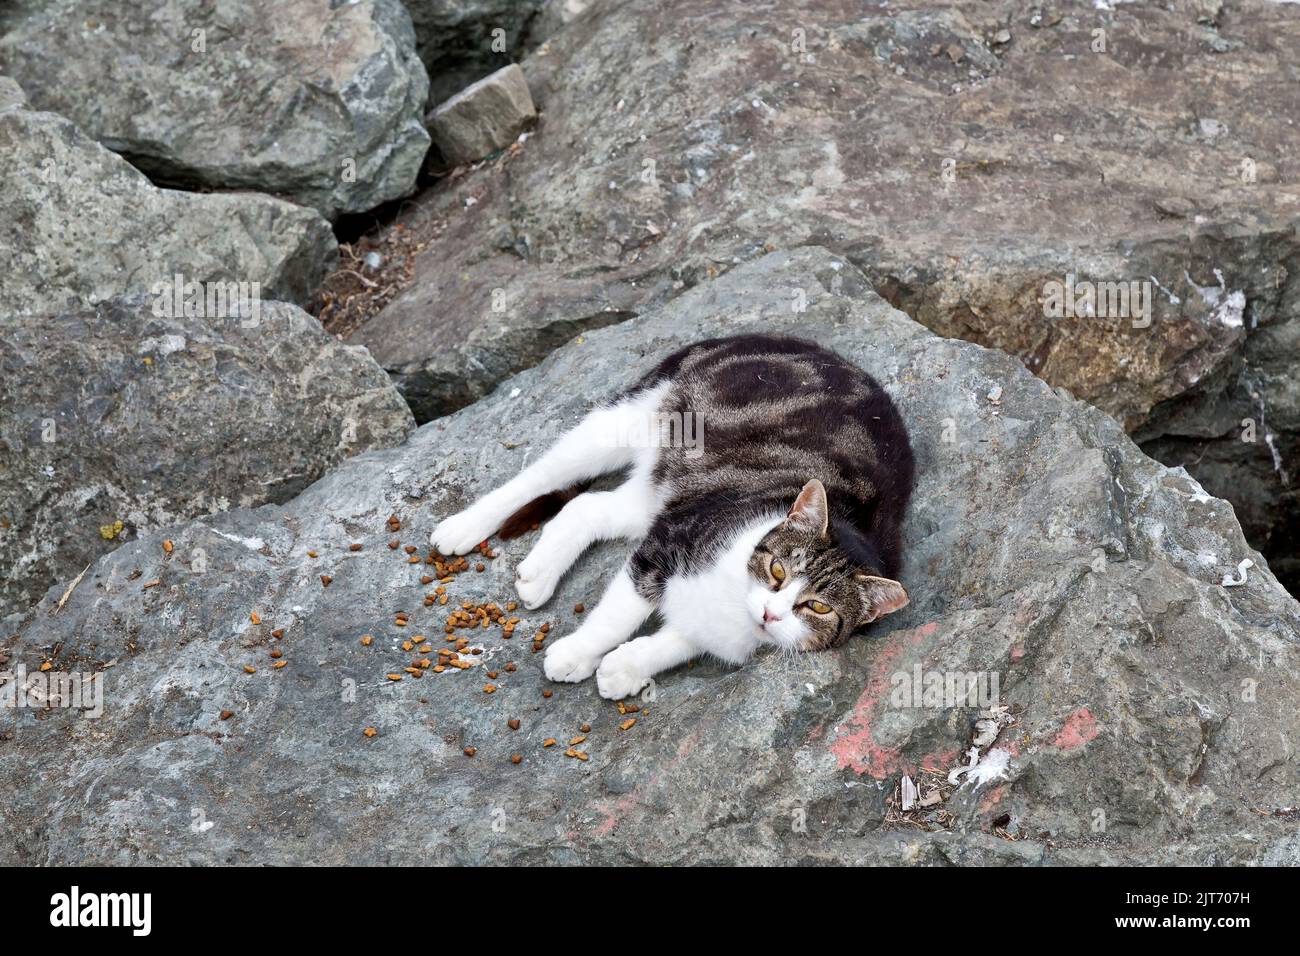 Abandonado, sin hogar, descuidado gato 'Felis catus' (gato de la casa), donó alimentos secos para gatos, descansando a lo largo de rocas de refuerzo, puerto de barcos. Foto de stock